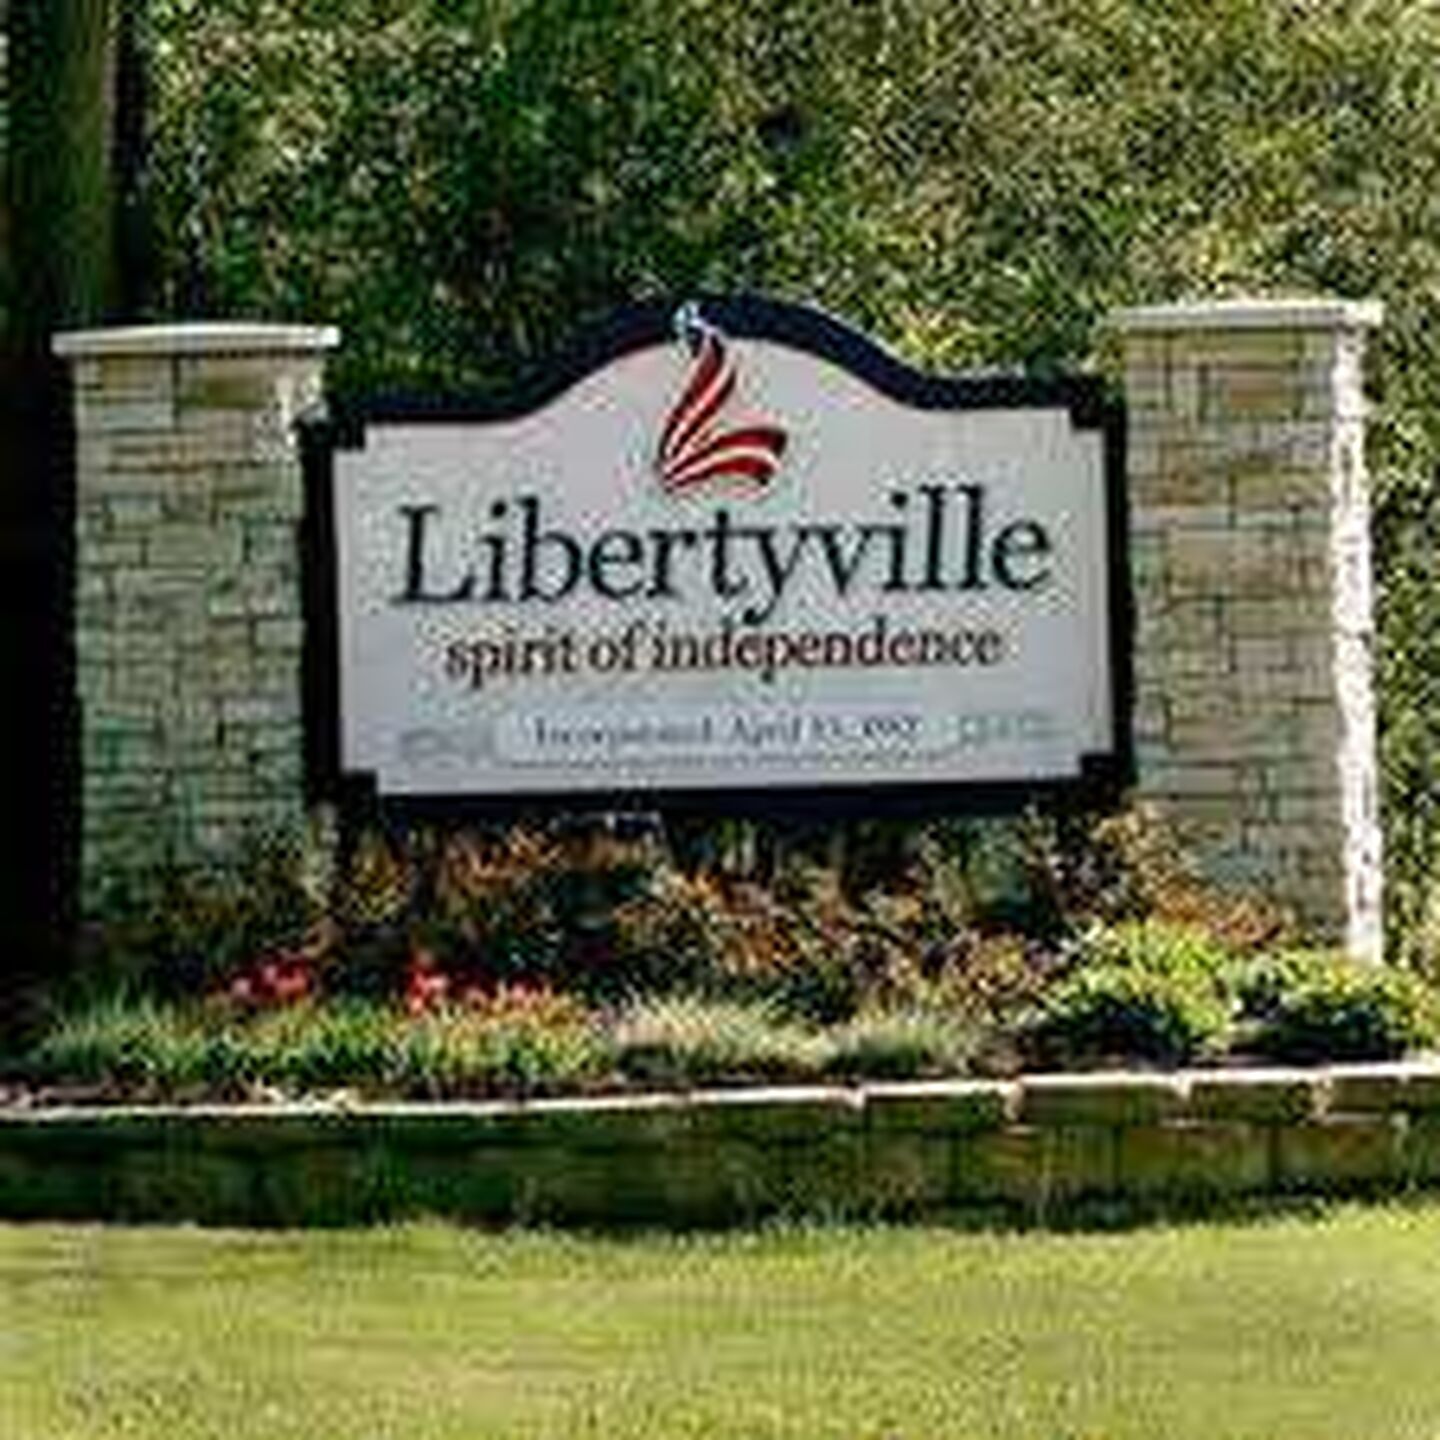 Libertyville Sign